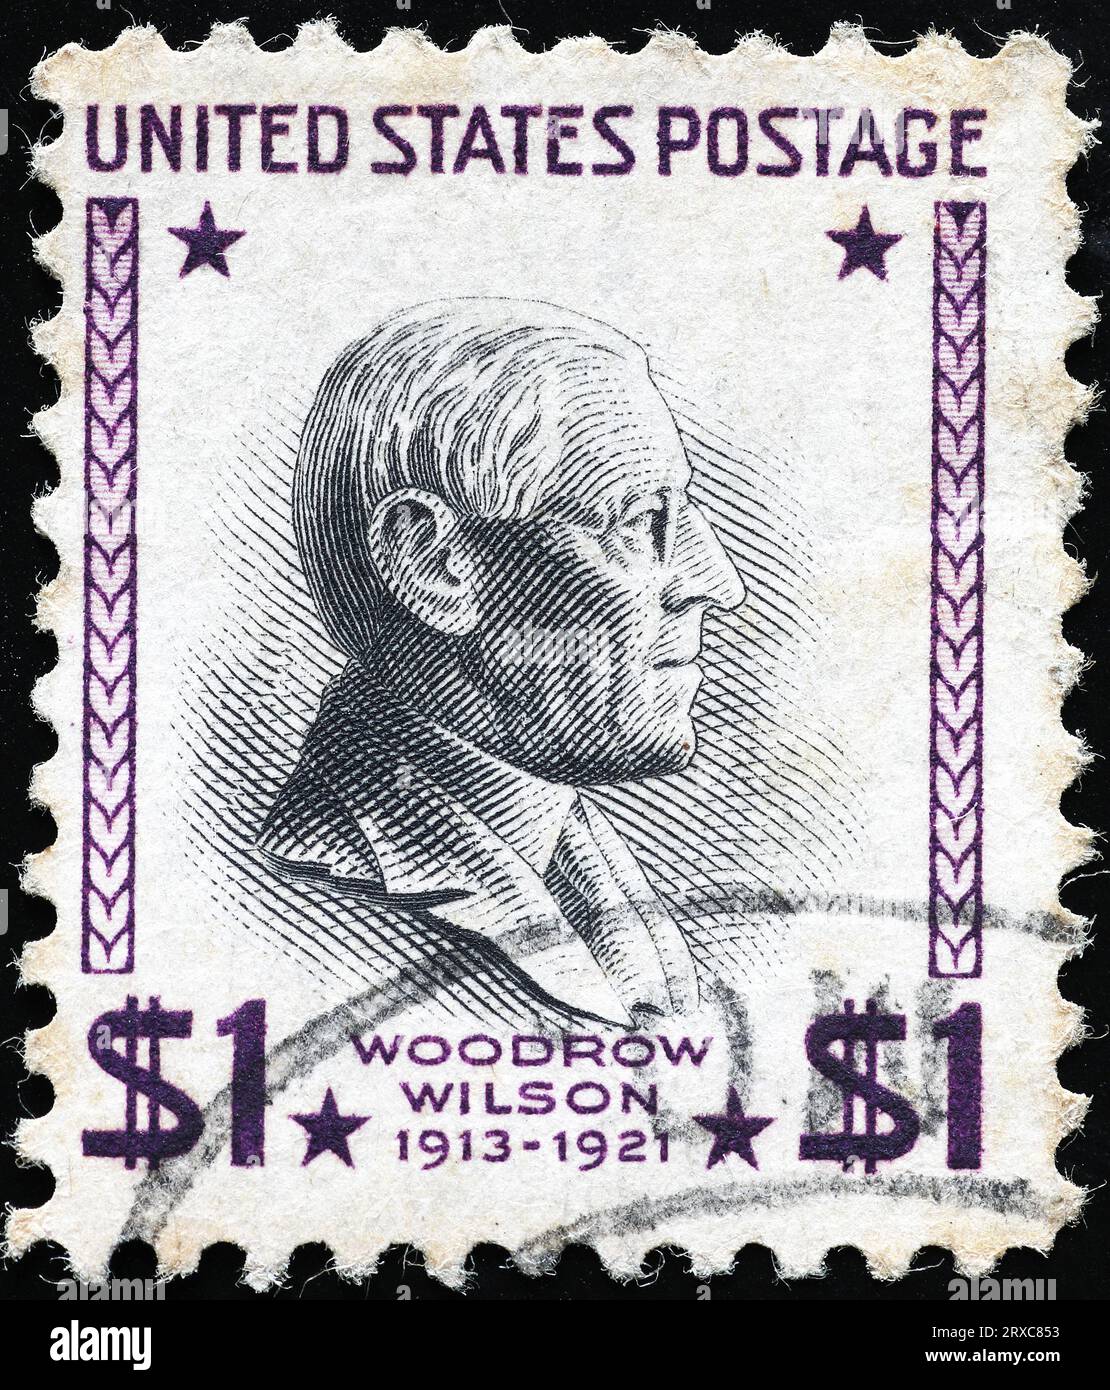 US President Woodrow Wilson on vintage postage stamp Stock Photo